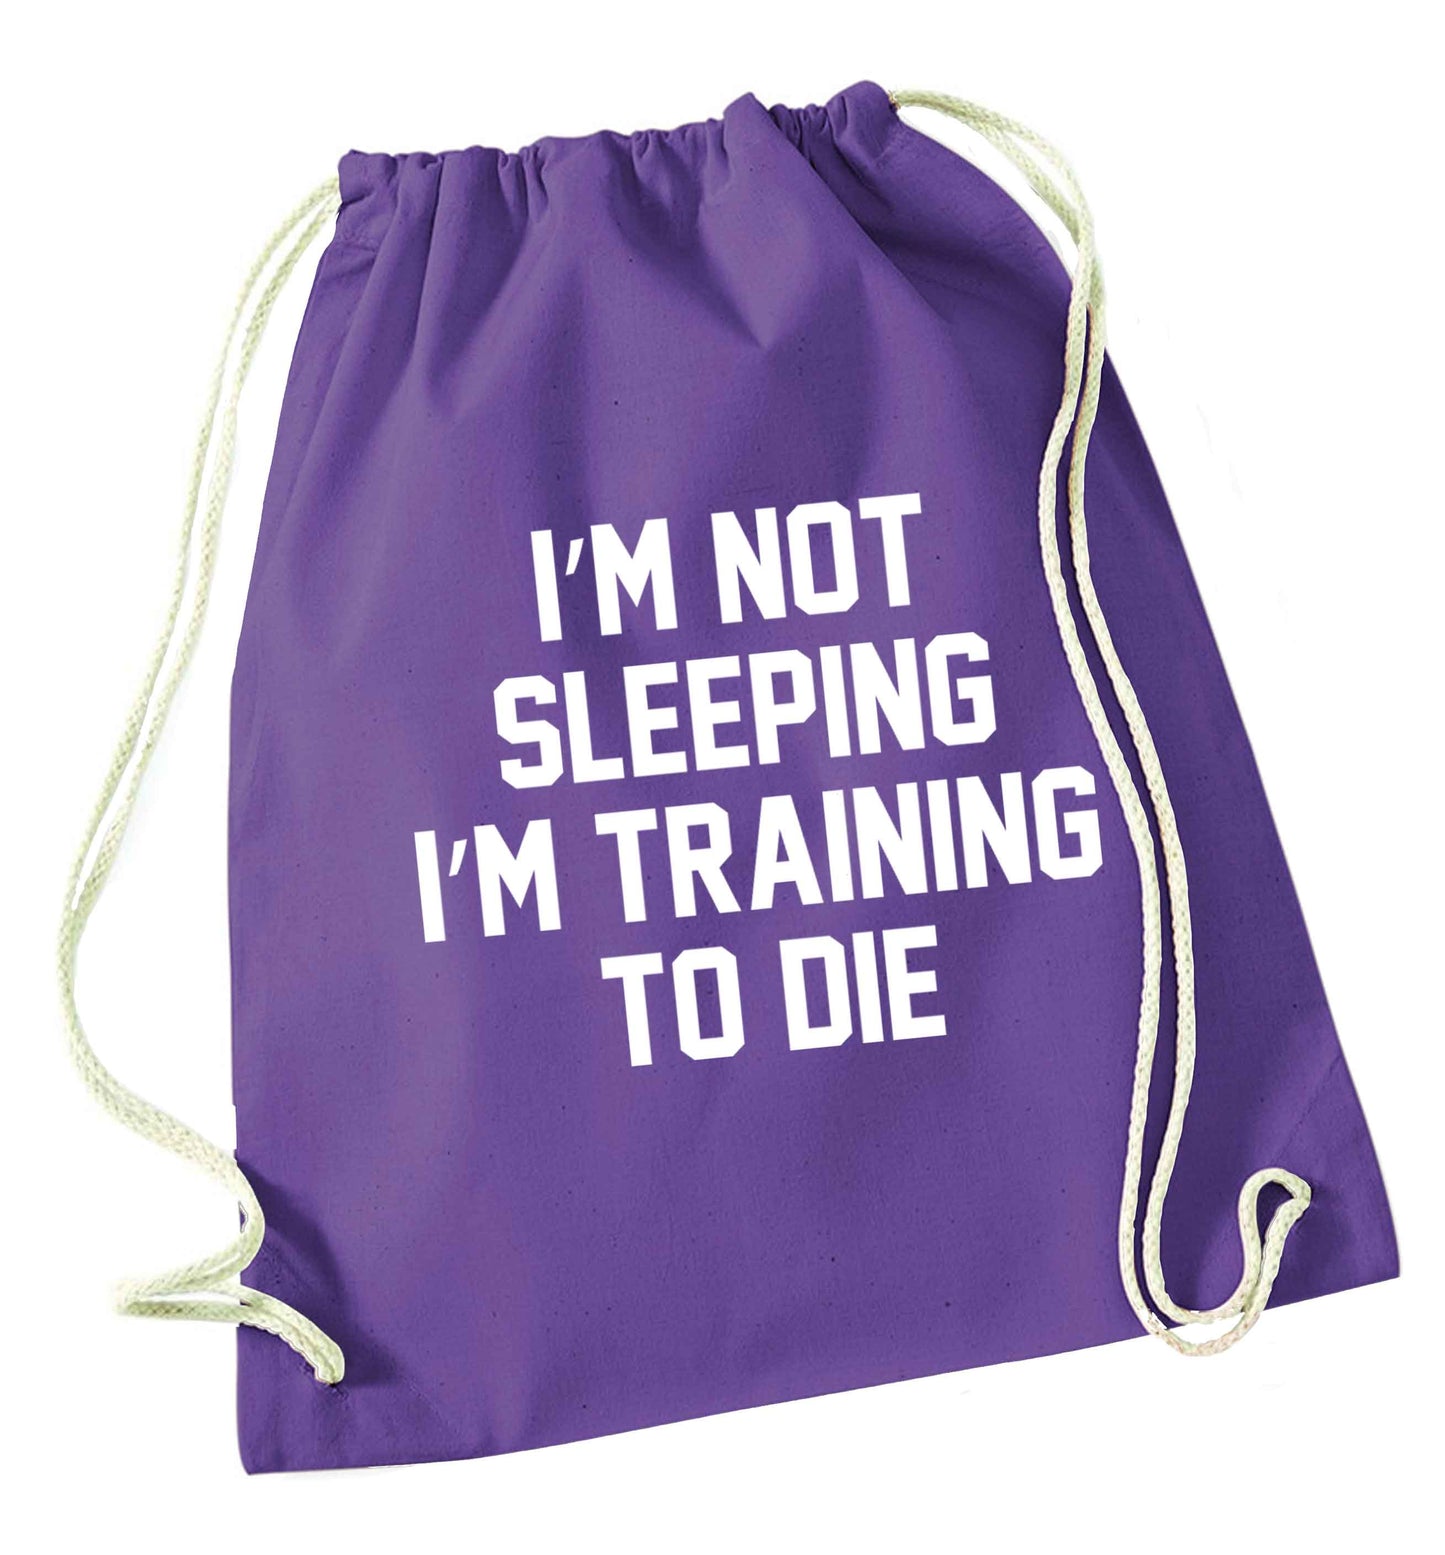 I'm not sleeping I'm training to die purple drawstring bag